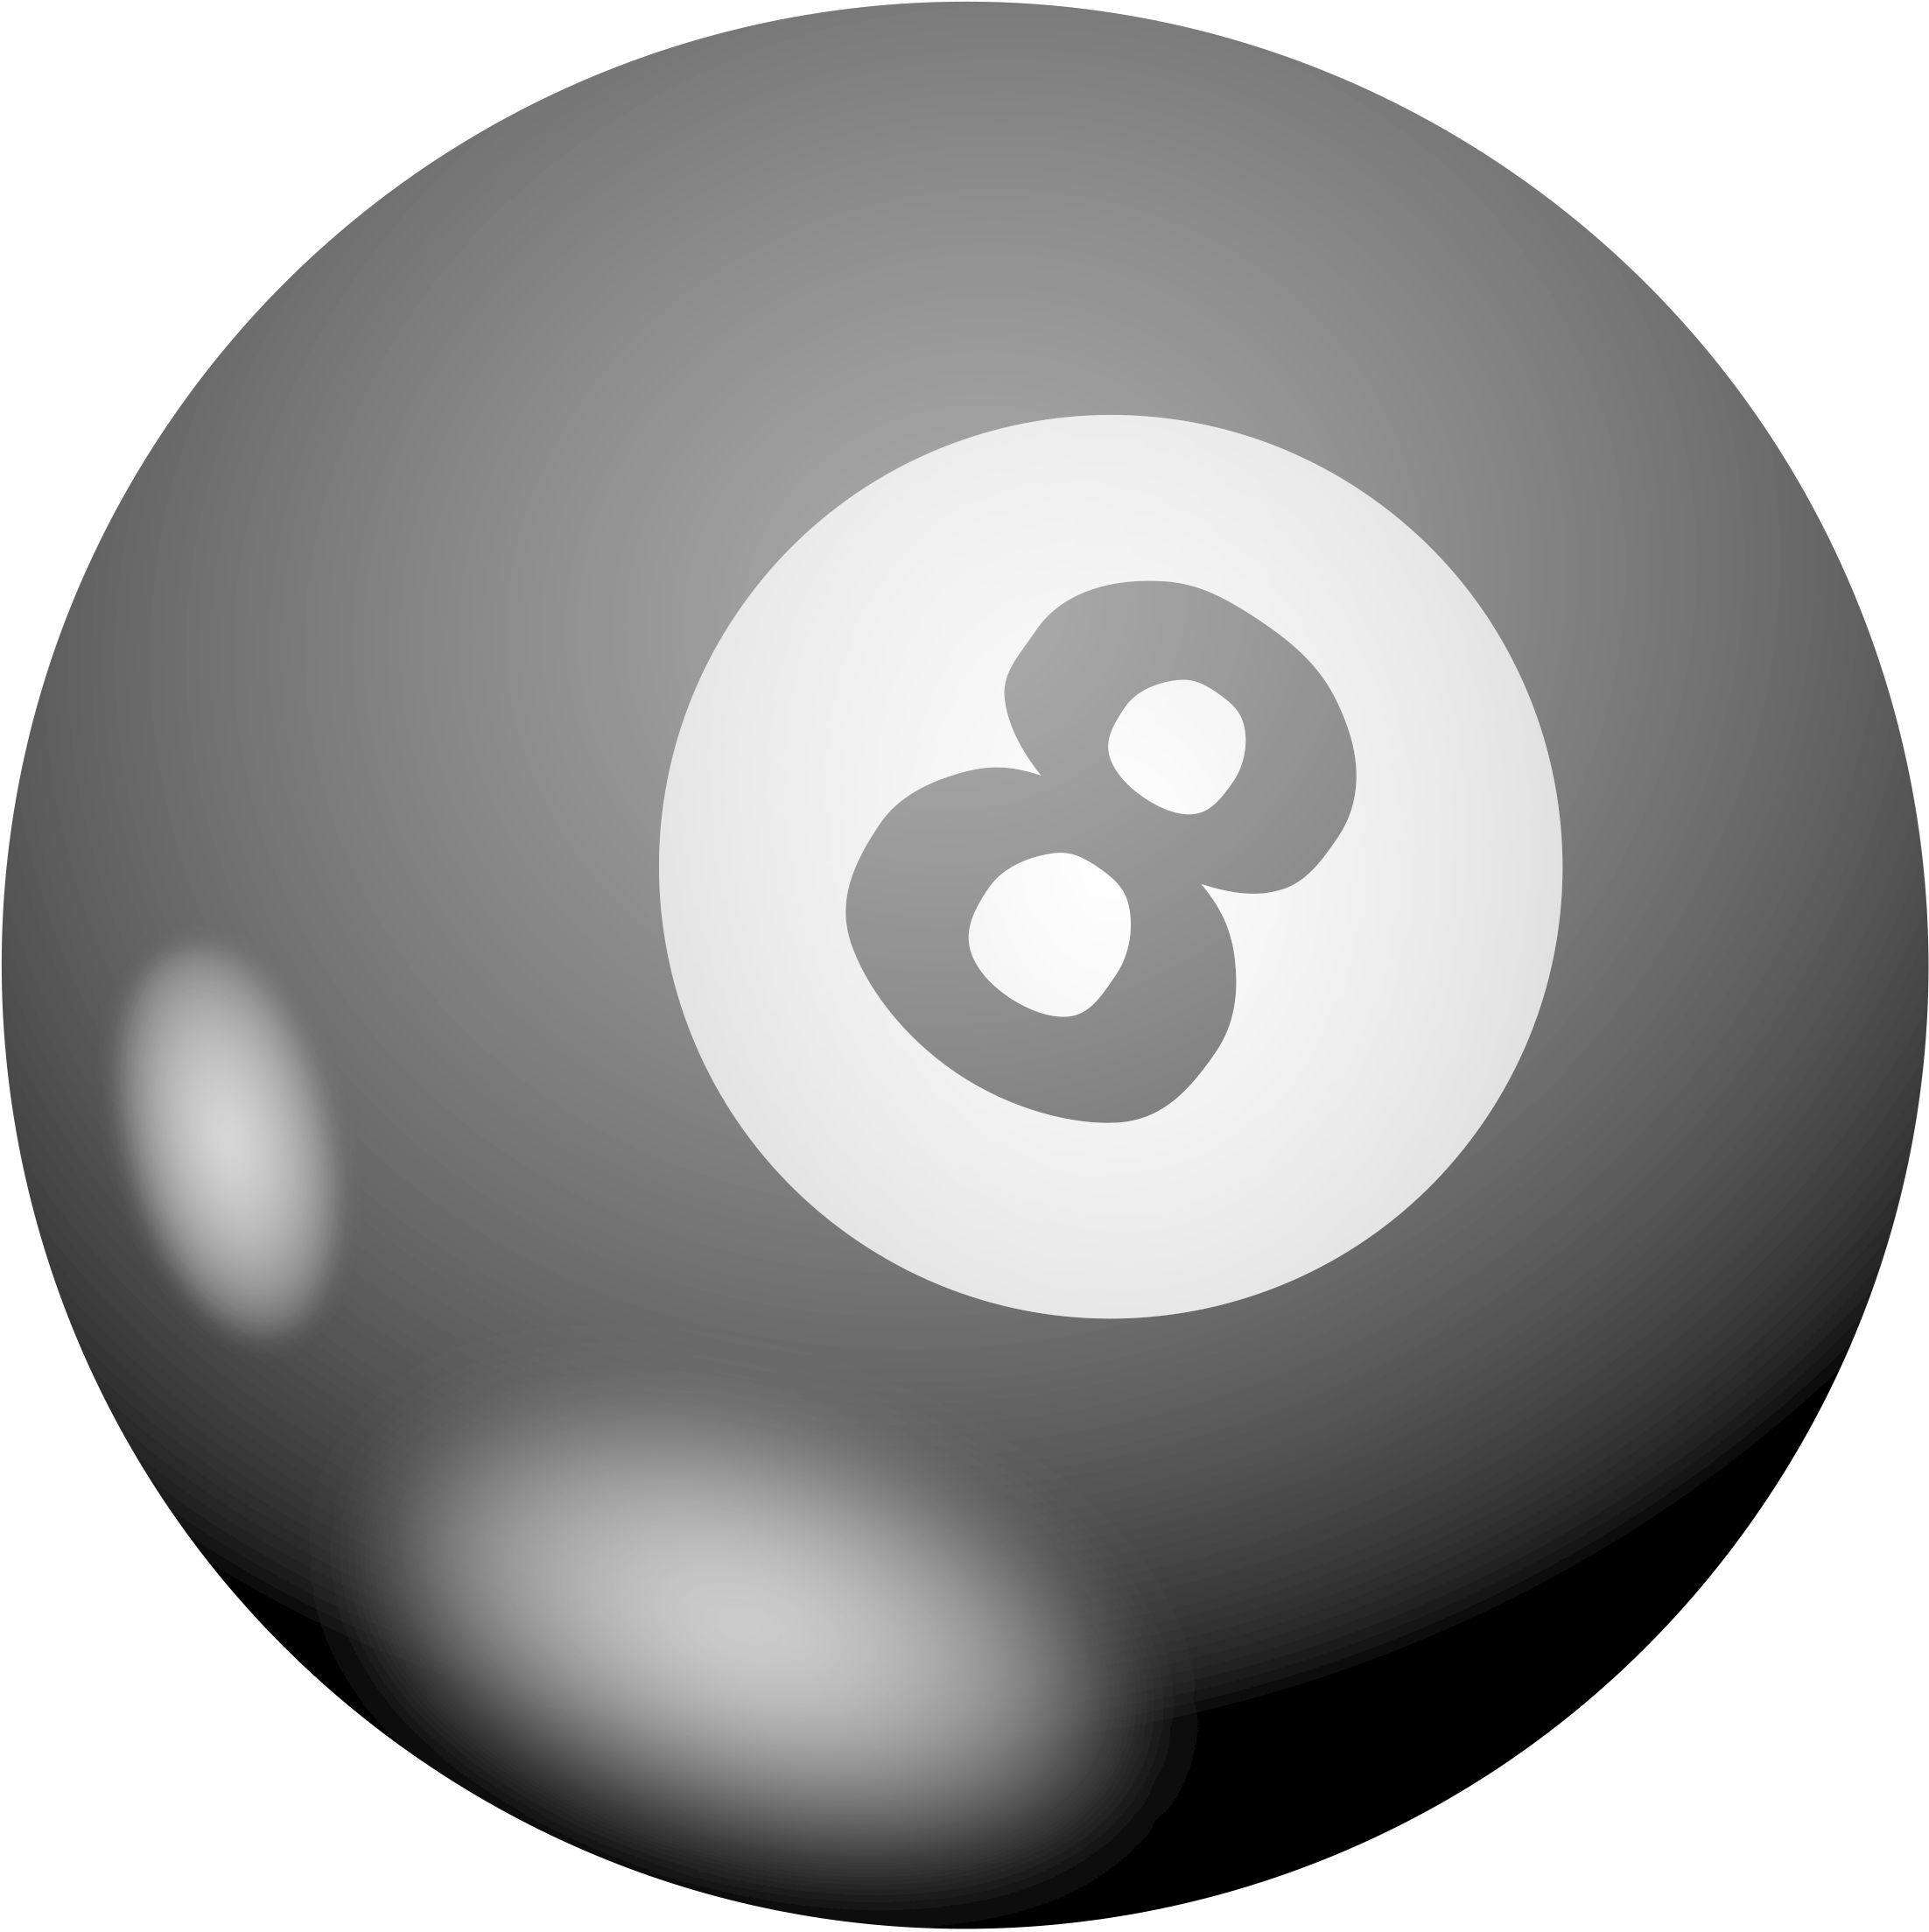 Шаре икс. Бильярд "8 Ball Pool". Бильярдный шар вектор. Биллиард шар 8. Шар для бильярда 8 вектор.